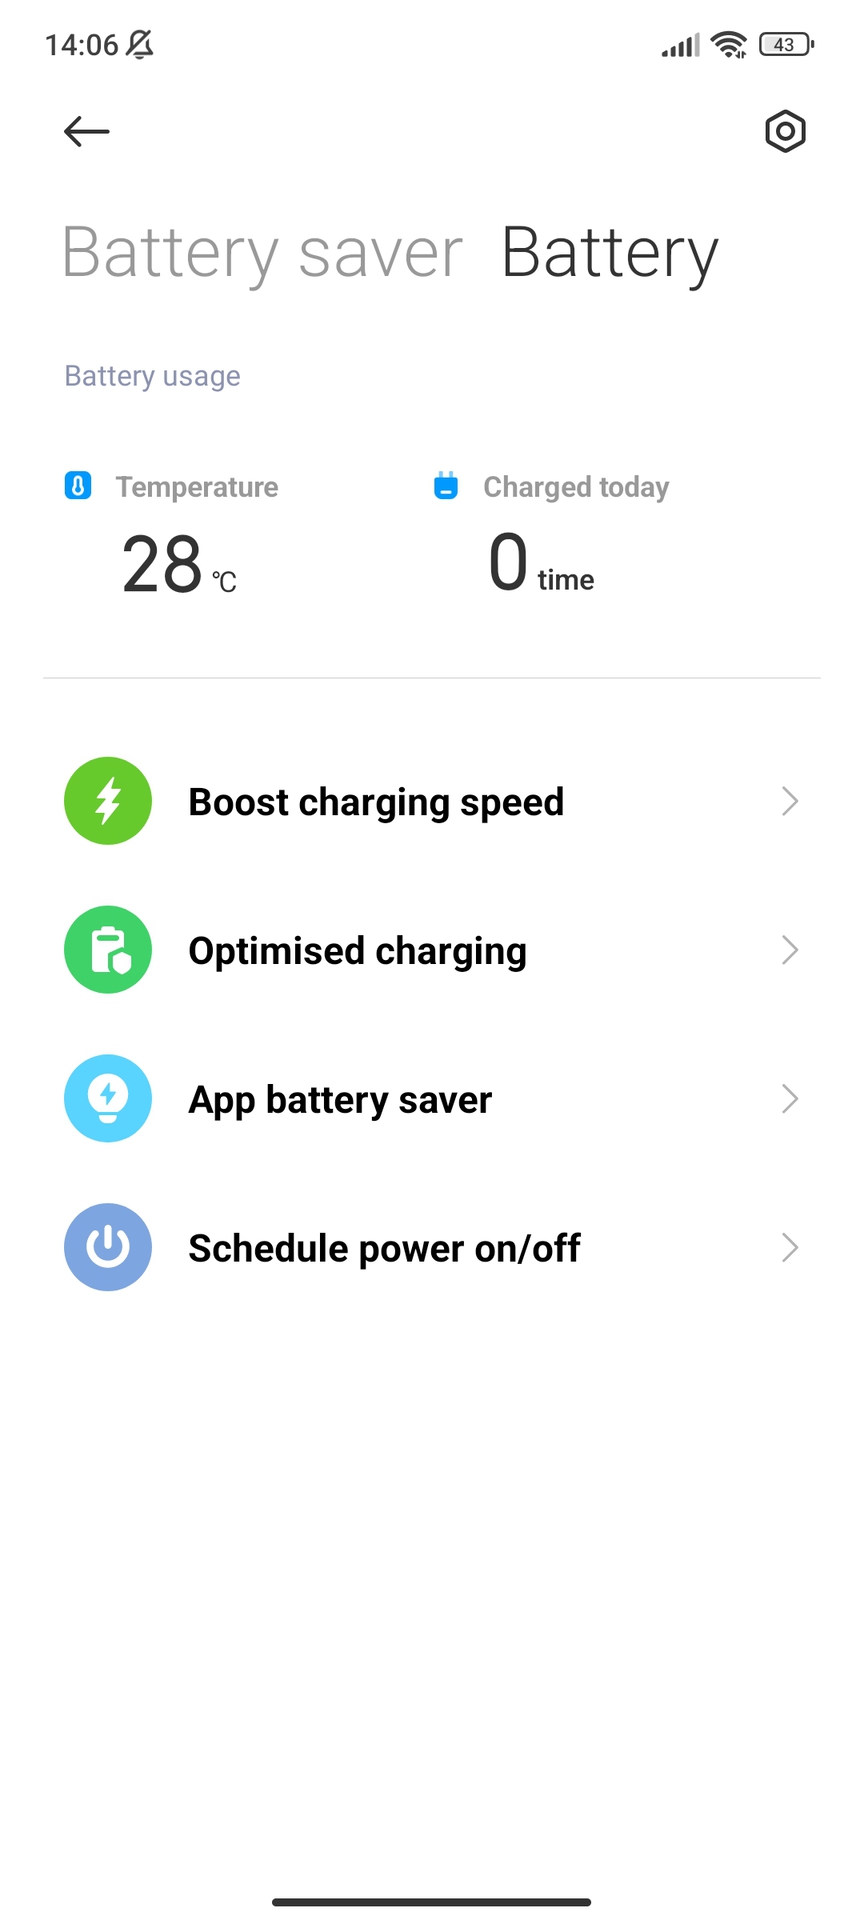 MIUI app battery saver battery usage